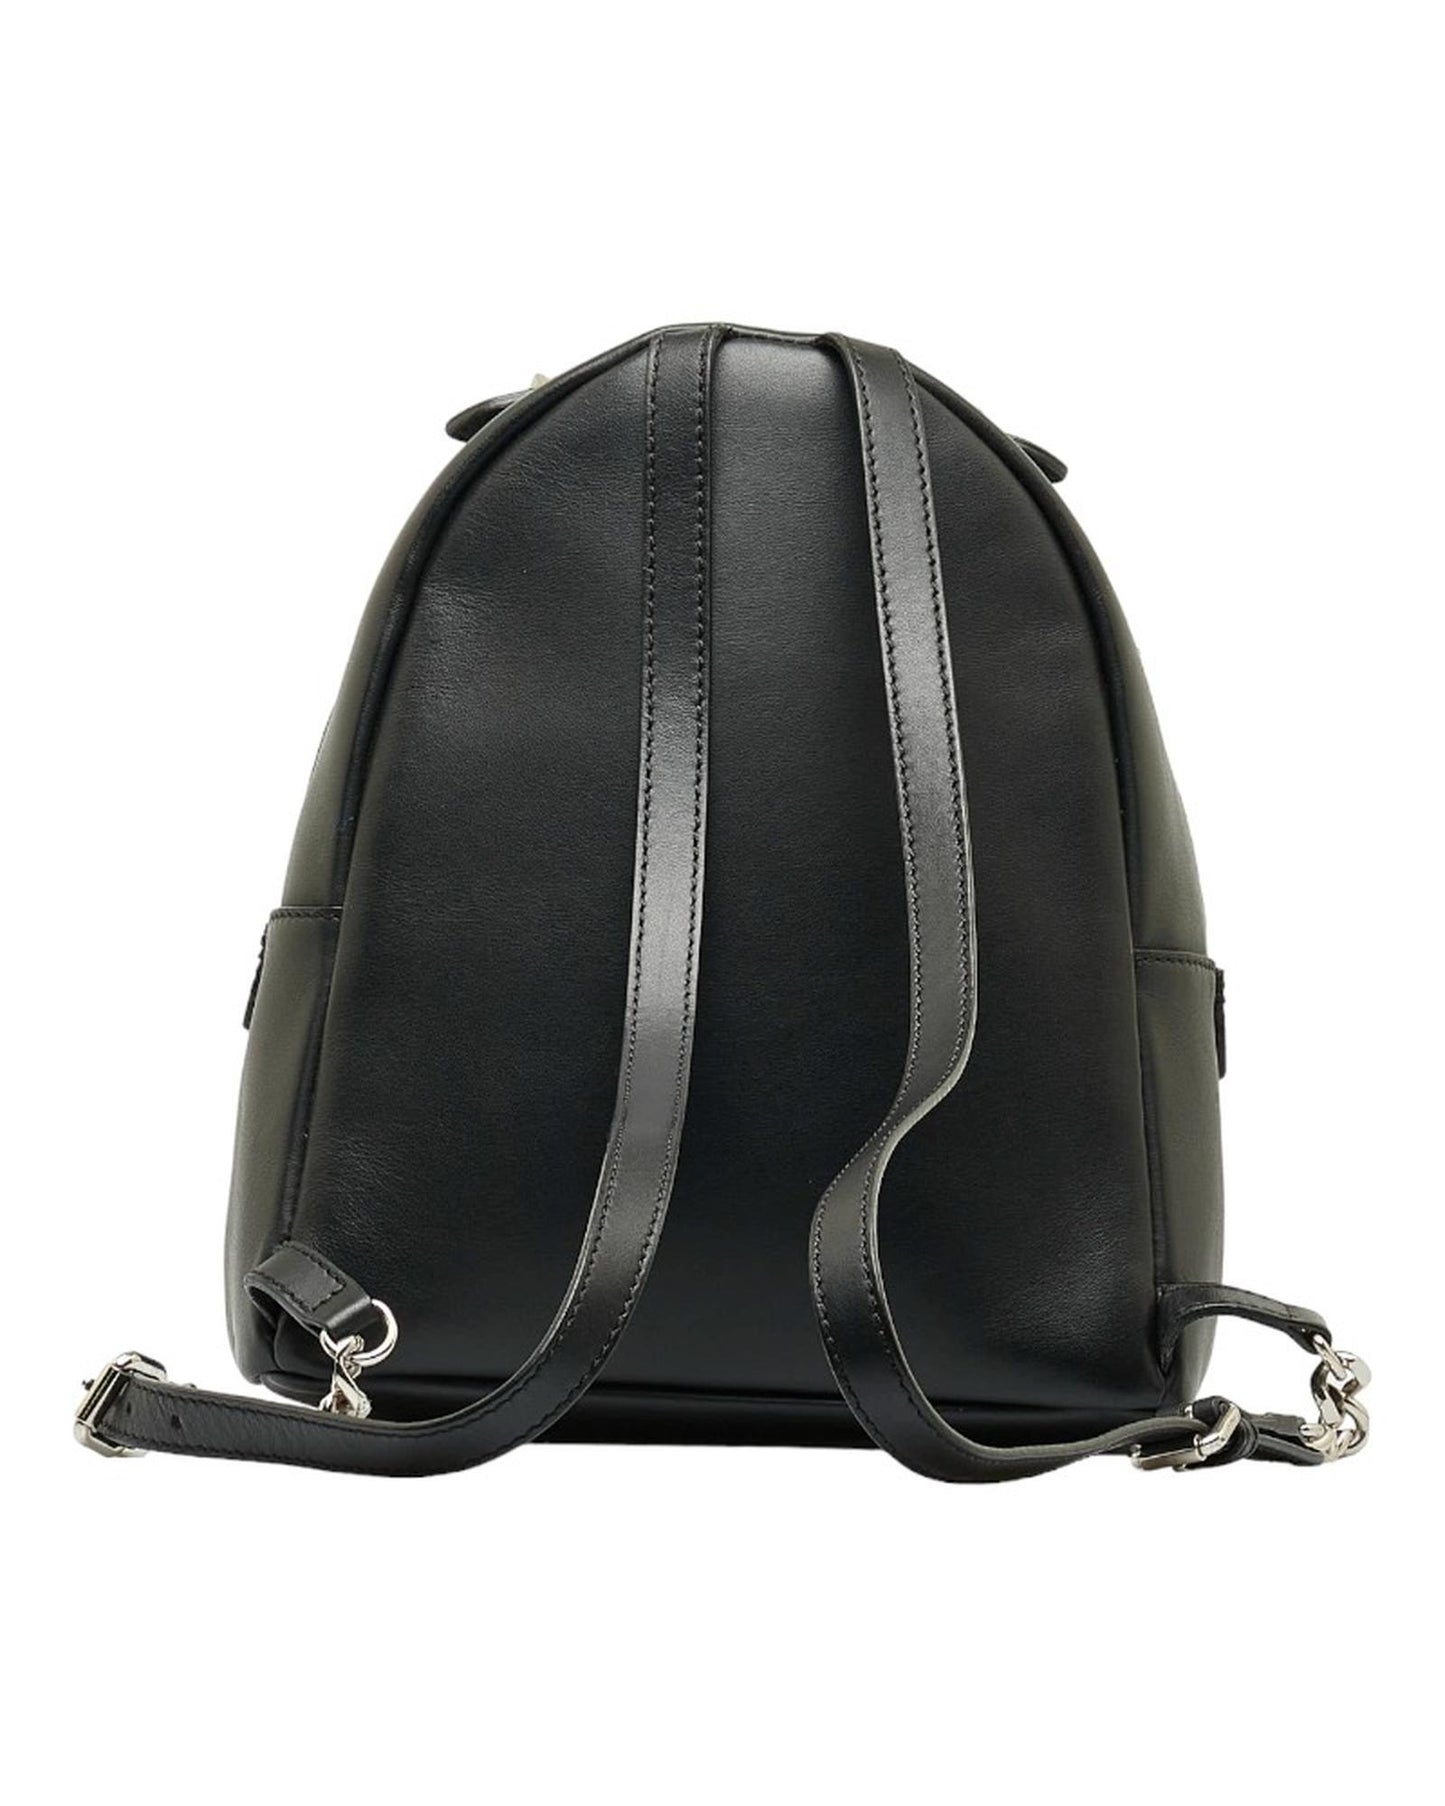 Fendi Women's Fun Fair Studded Mini Backpack Bag in Black